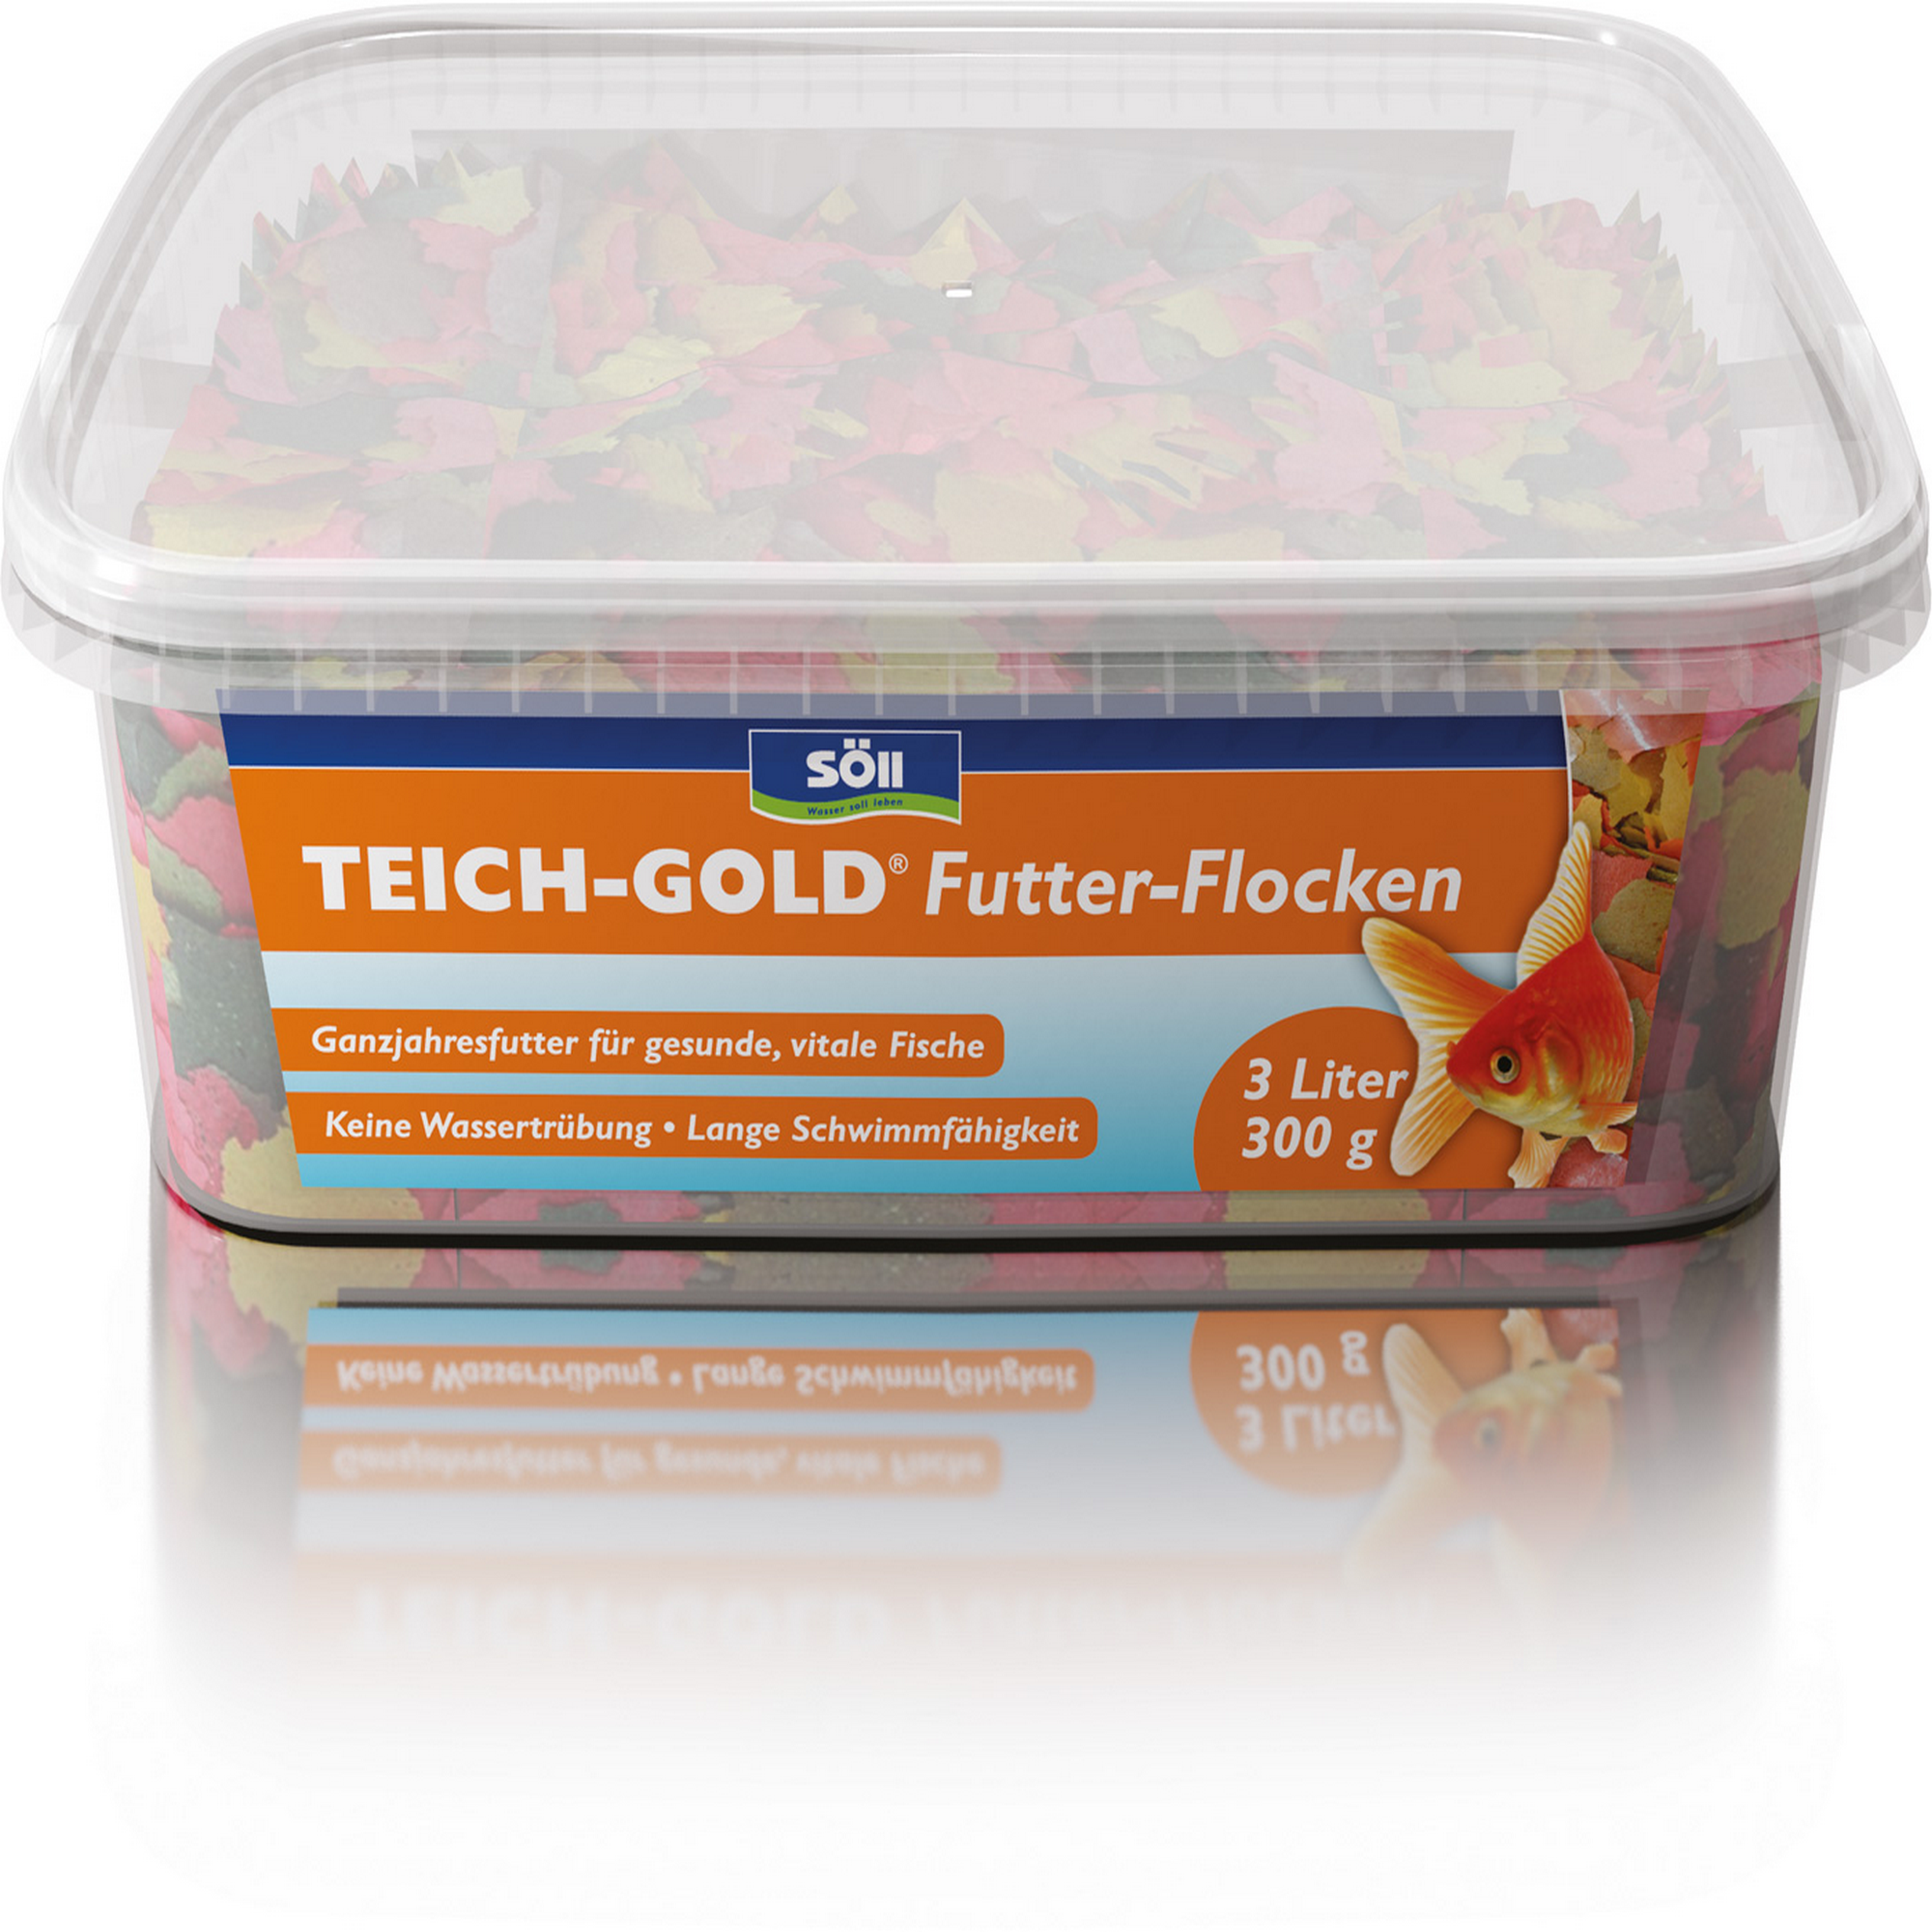 TEICH-GOLD Futter-Flocken 3 l + product picture